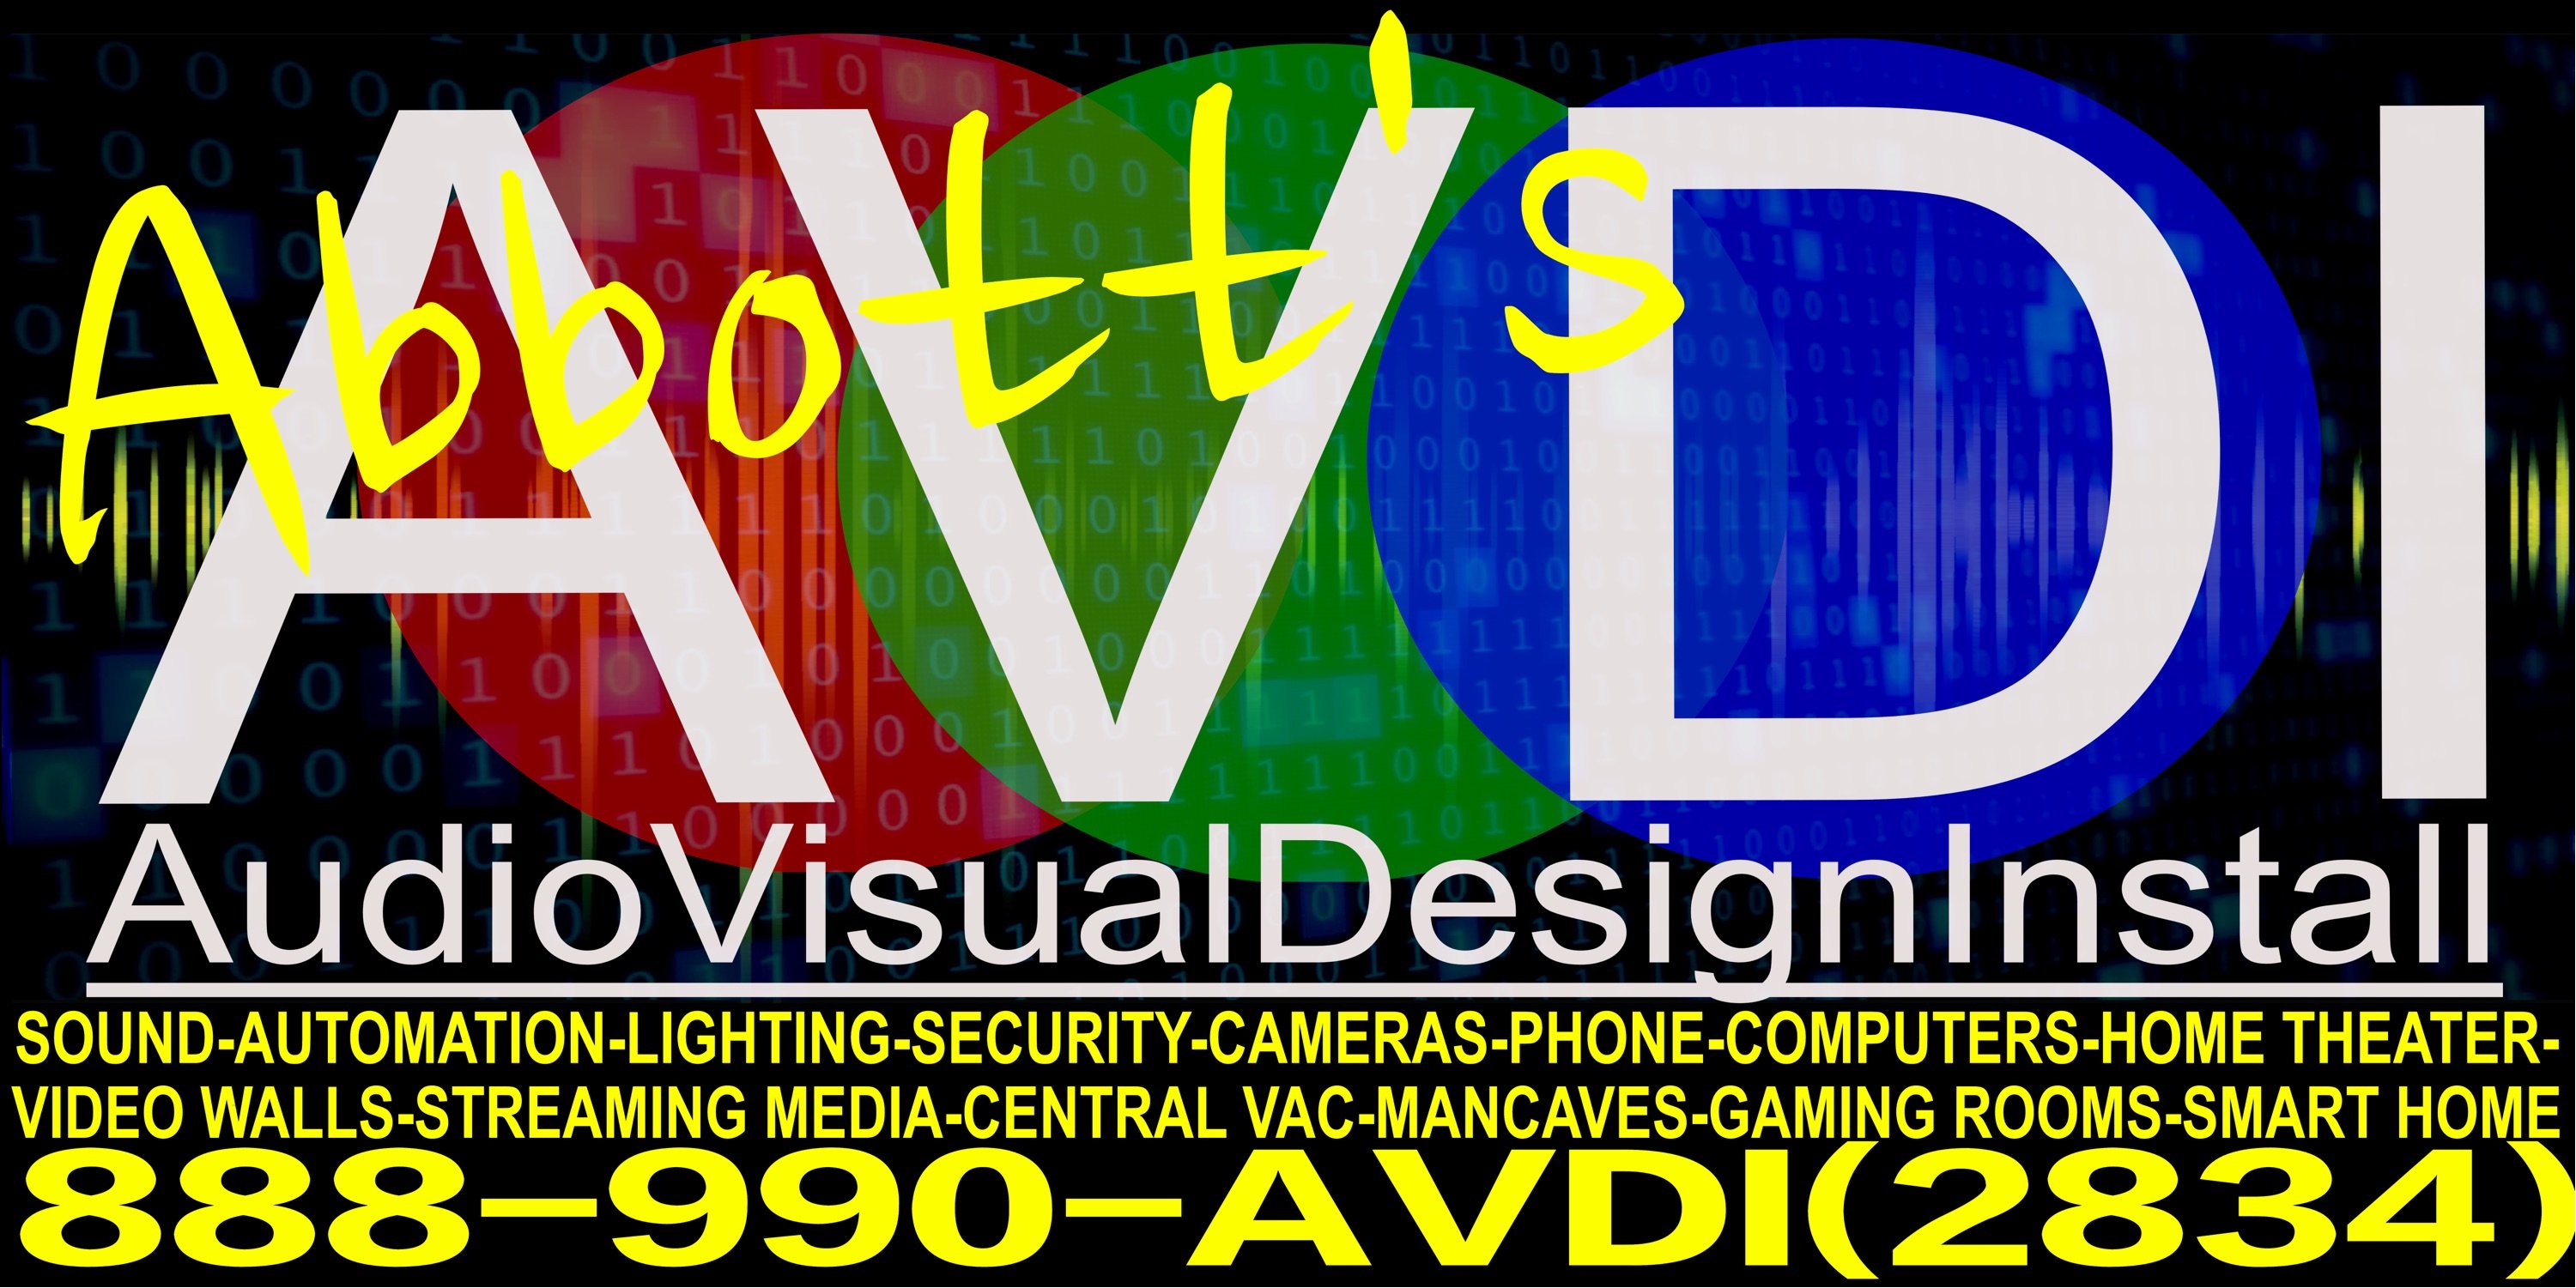 Abbott Audio Visual Design and Installation Logo